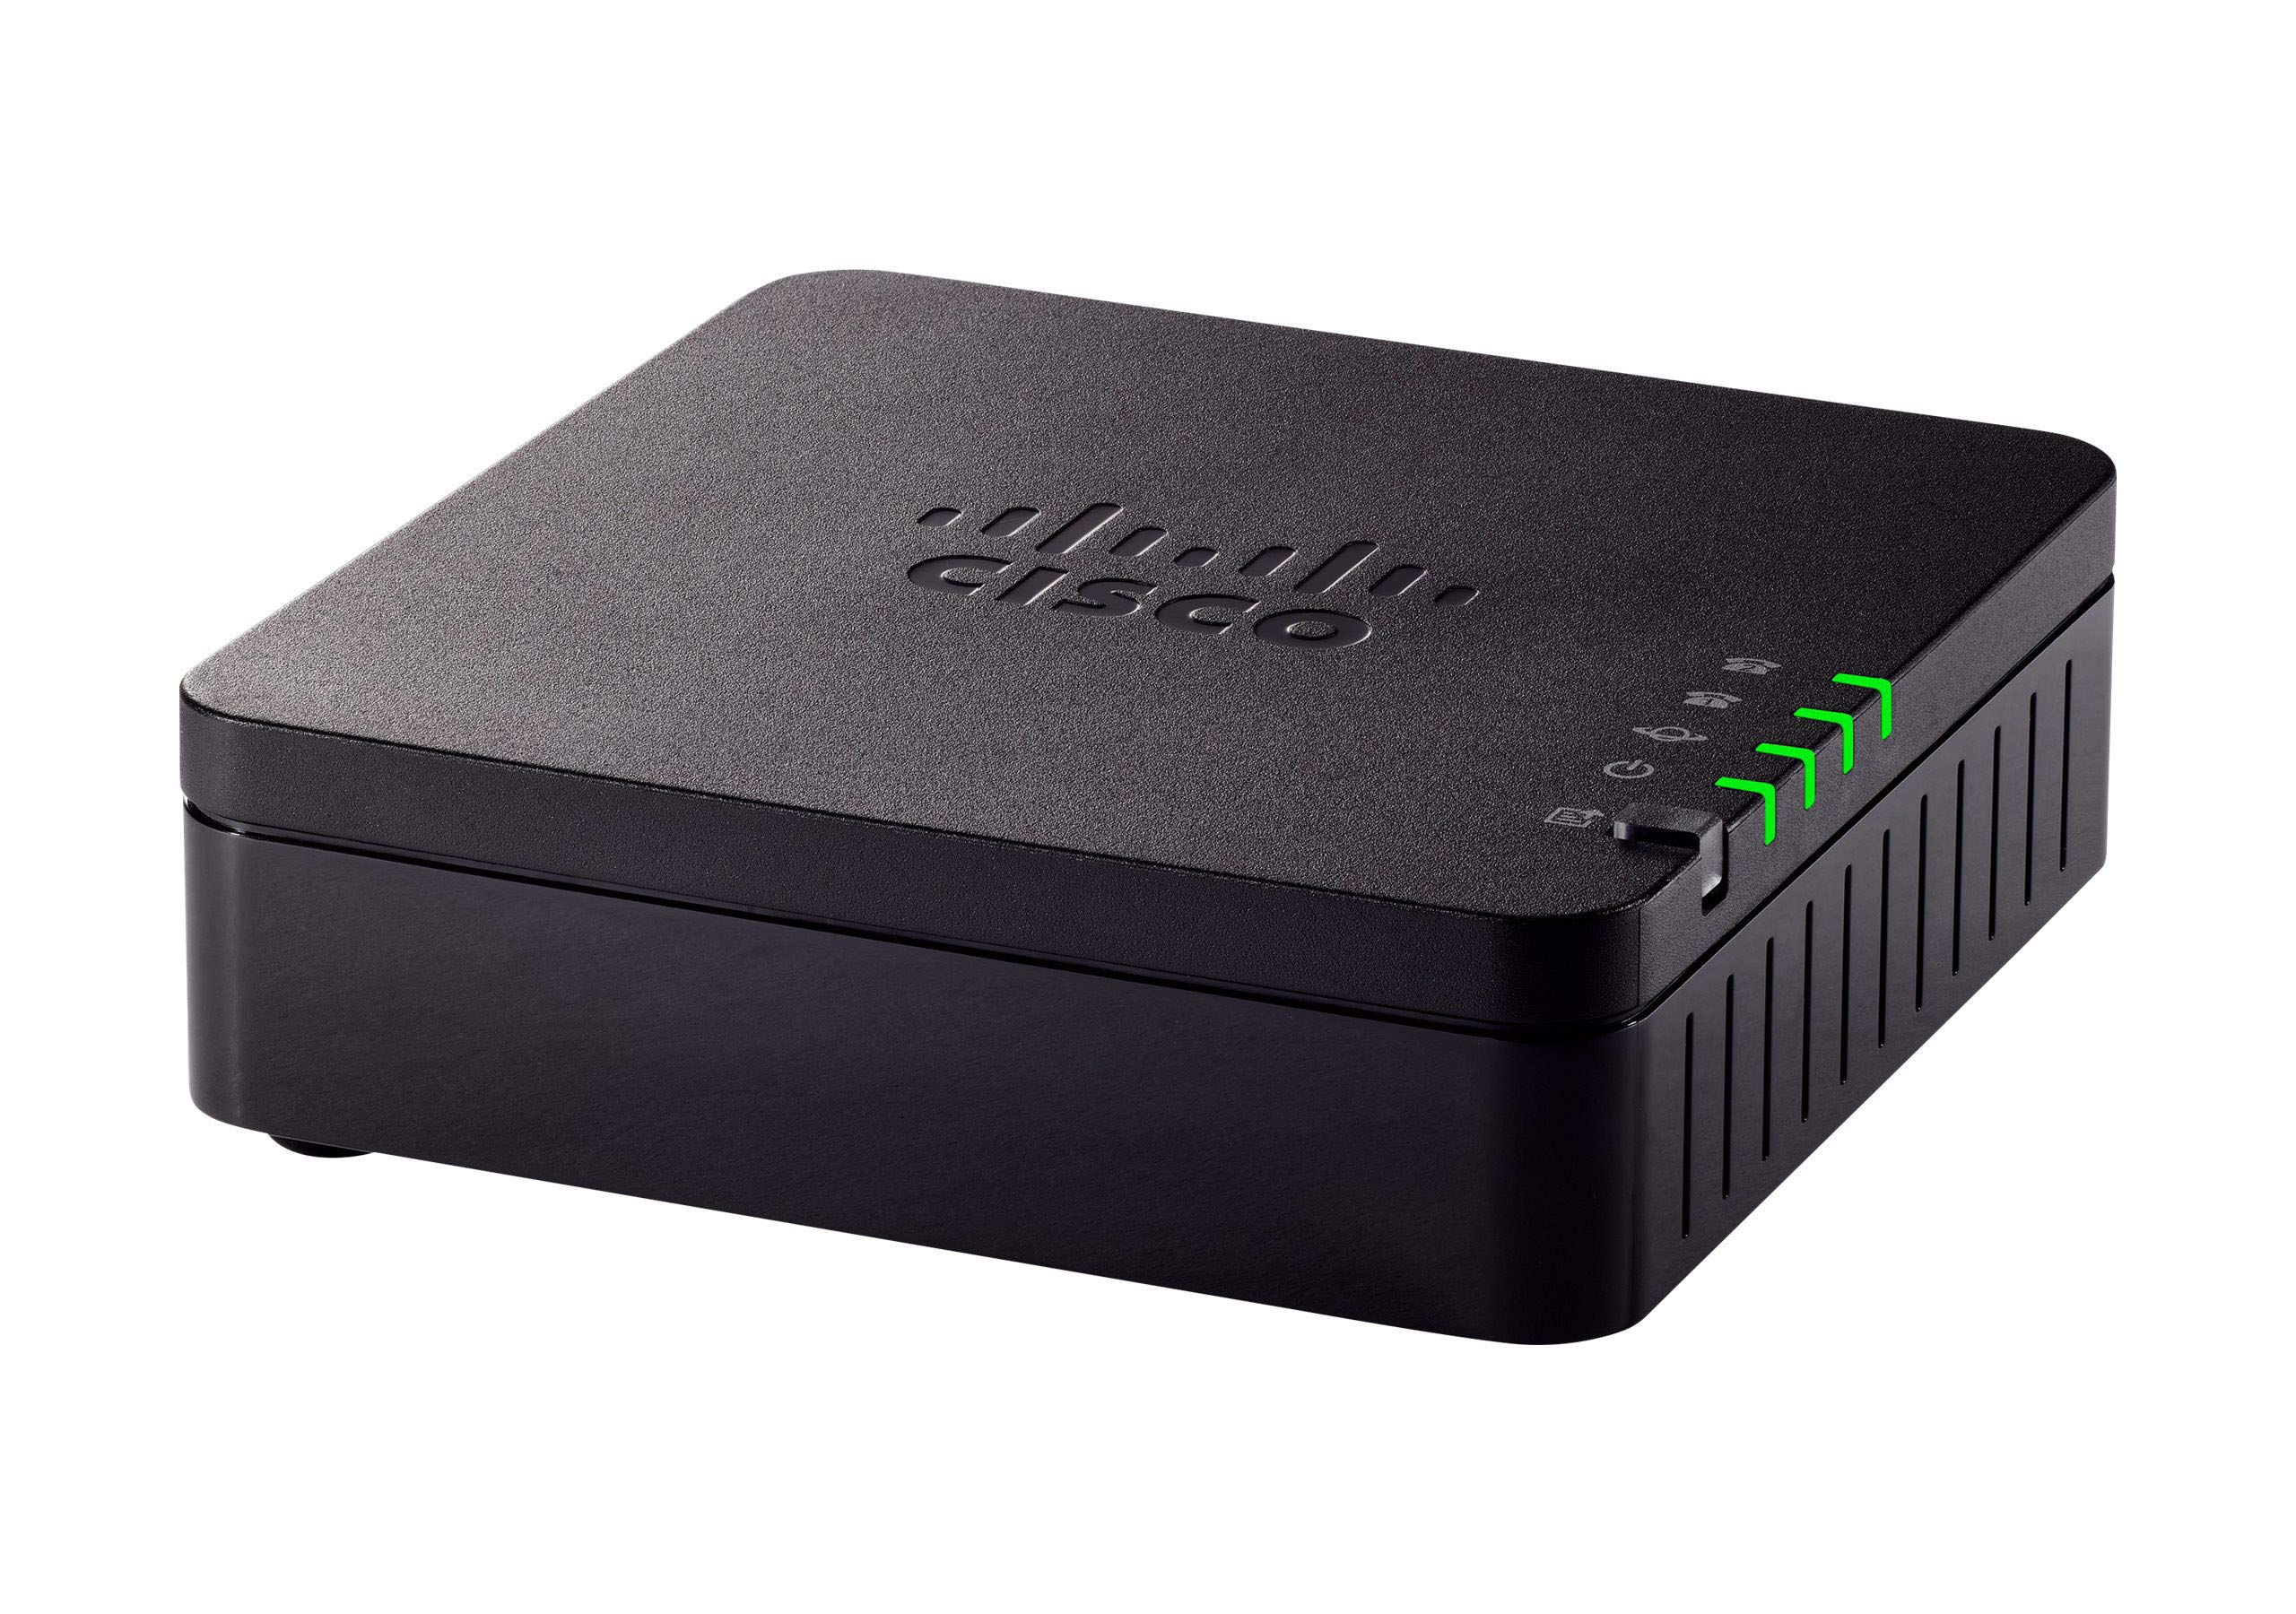 cisco ATA 191 Multiplatform Analog Telephone Adapter, 2-Port Handset-to-Ethernet Adapter, 1-Year Limited Hardware Warranty (ATA1